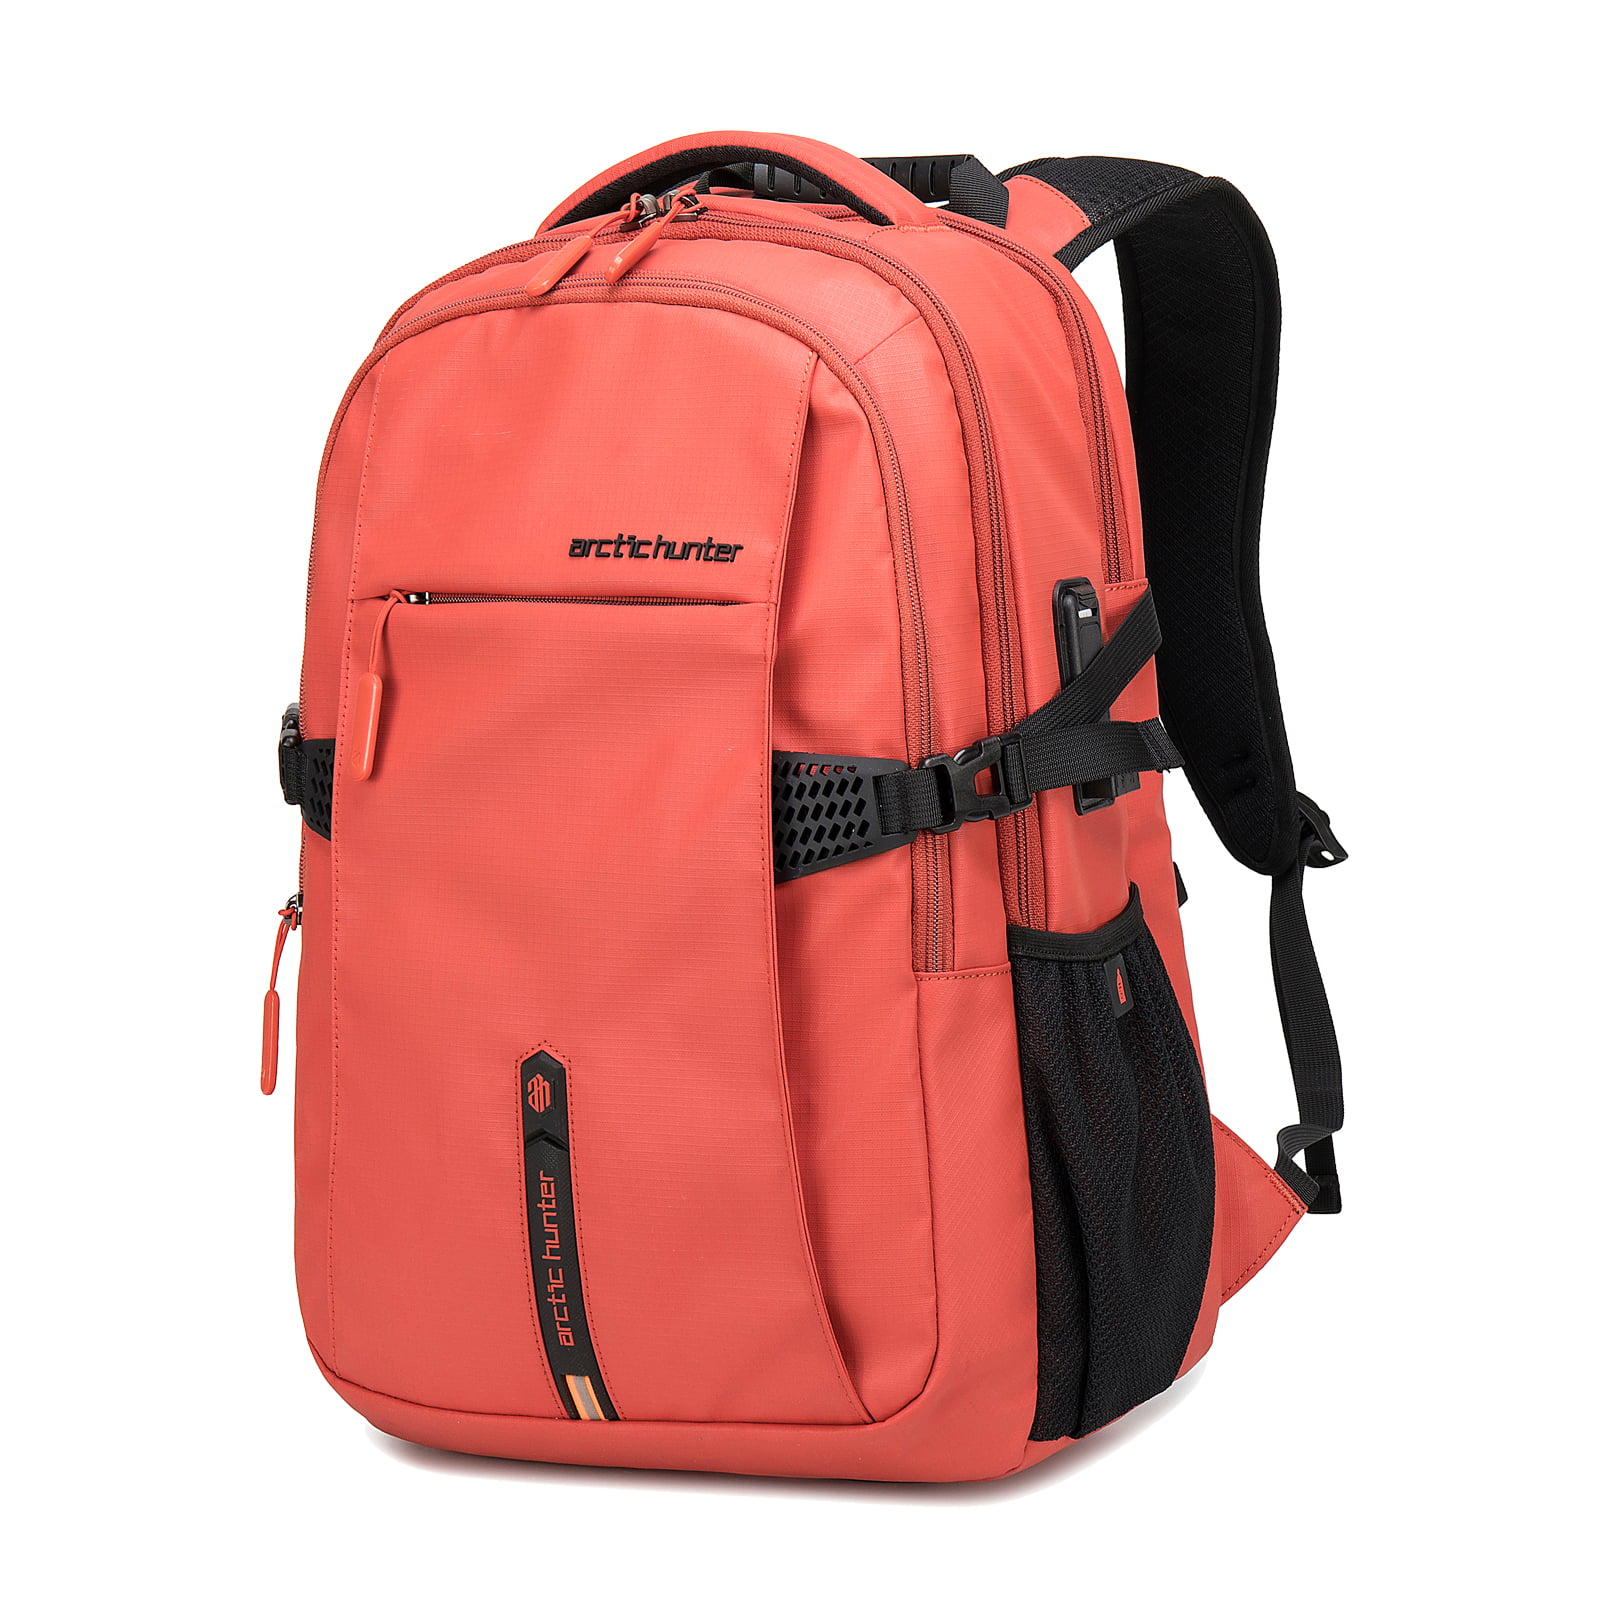 Cactus School Book Bags Water Resistant,Laptop Backpacks Shoulder Schoolbag for Students,Travel,Sport,16116.7